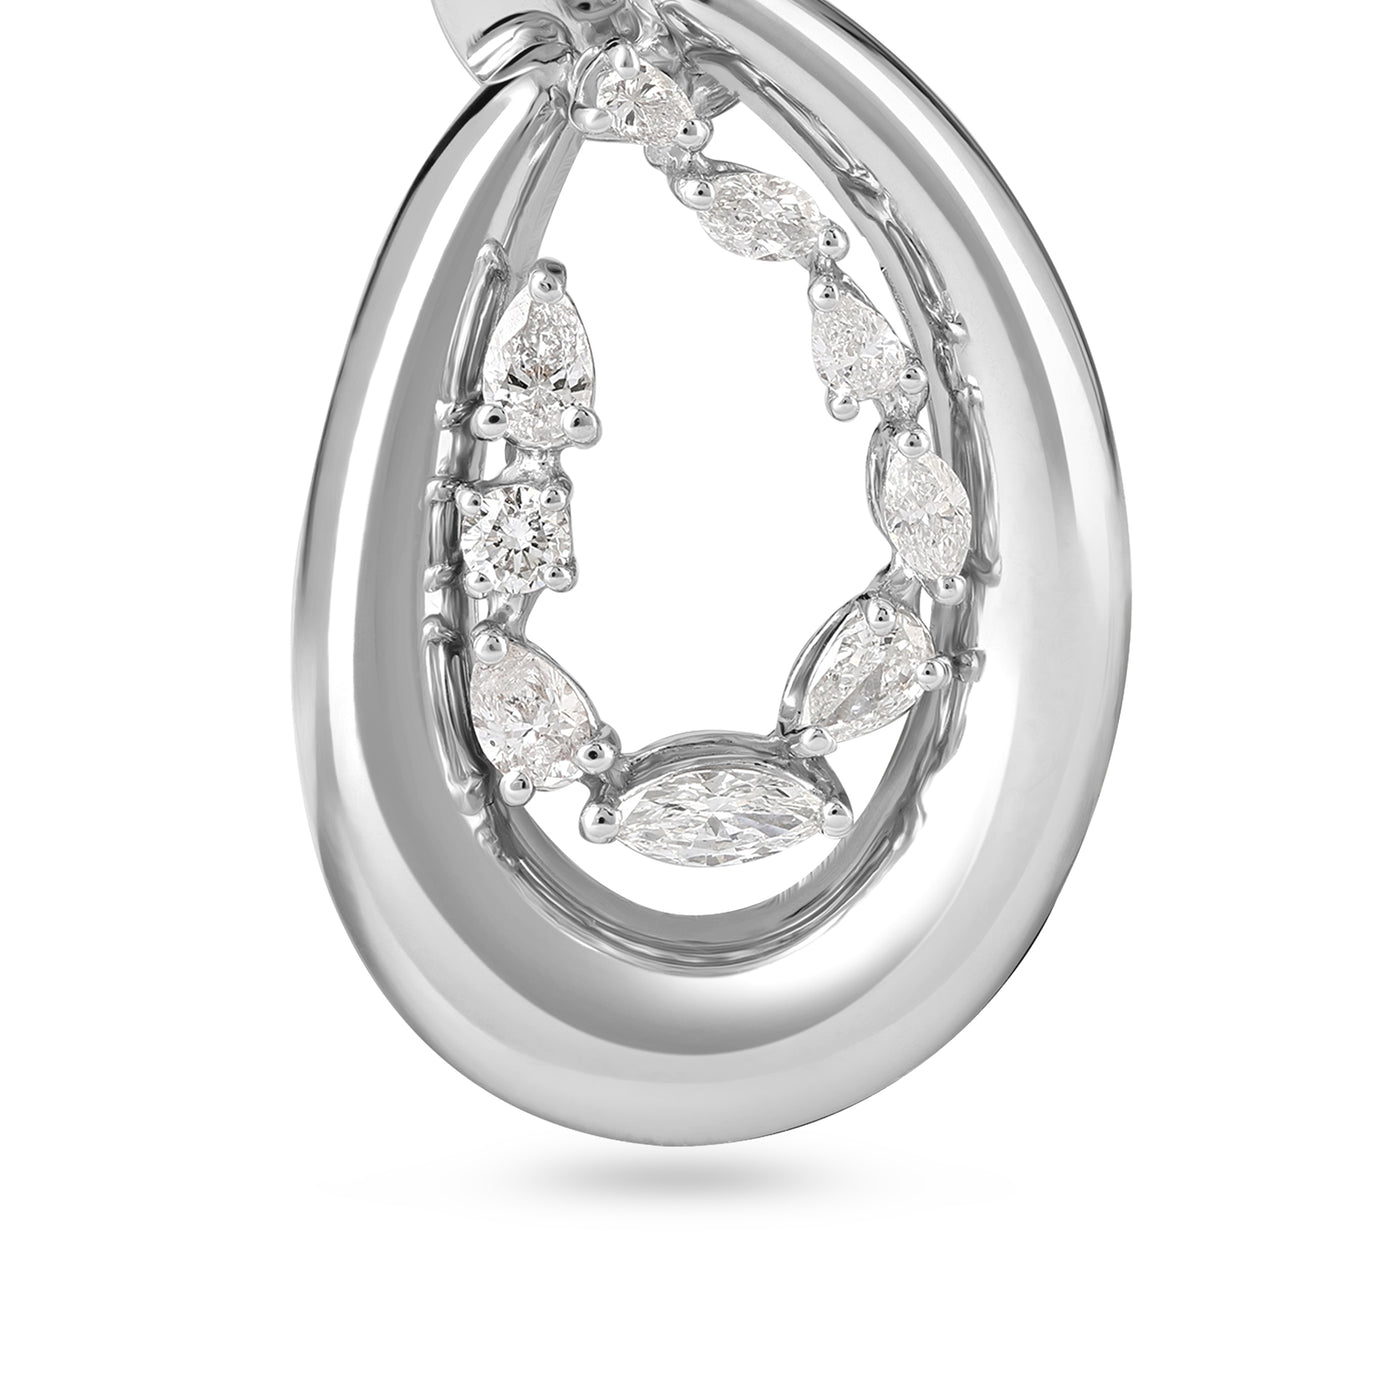 White Gold Pear Diamond Earring